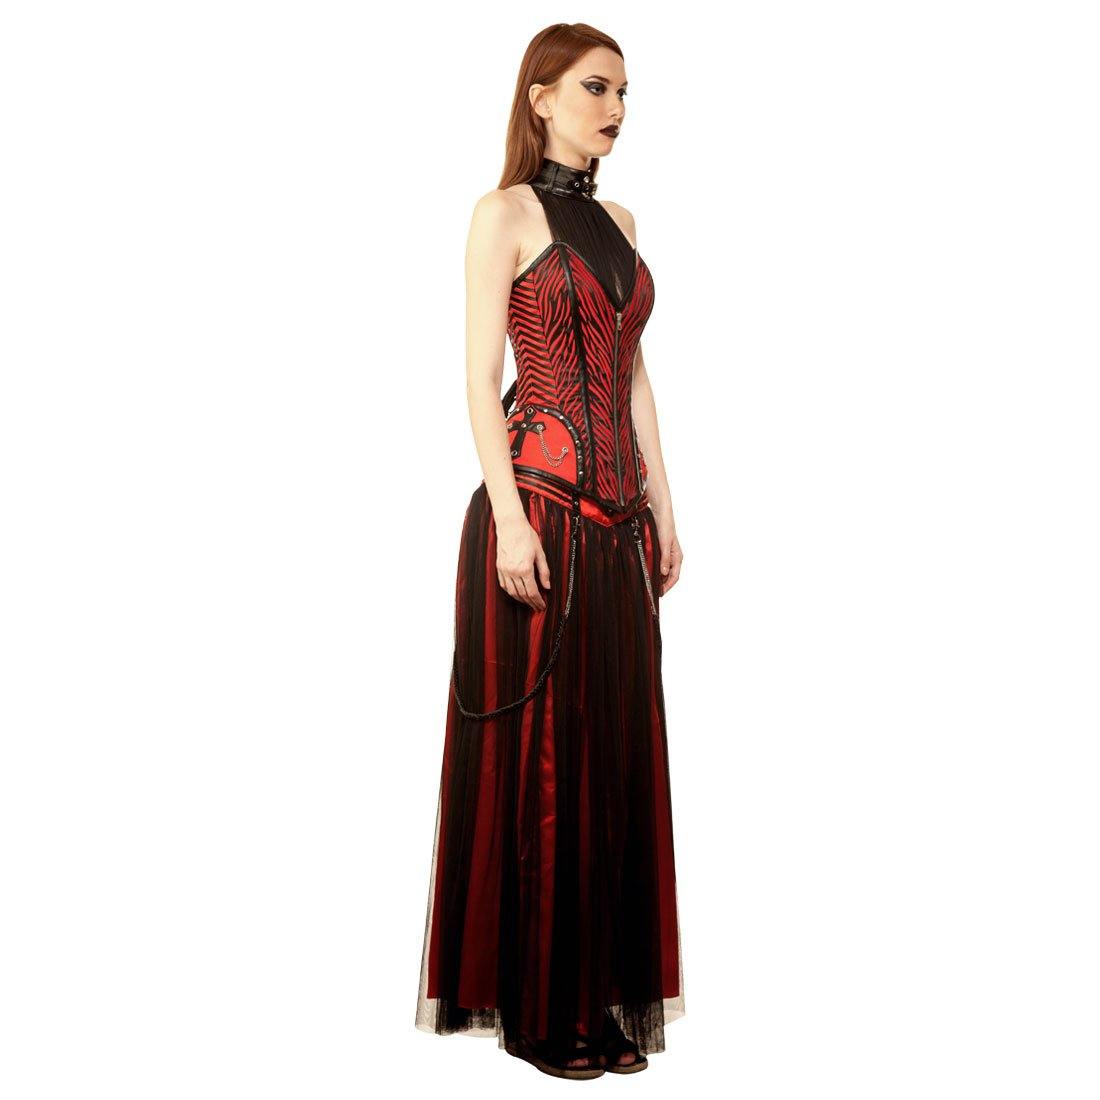 Rachel Gothic Authentic Steel Boned Long Lined Halter Modesty Overbust Corset Dress - Corset Revolution